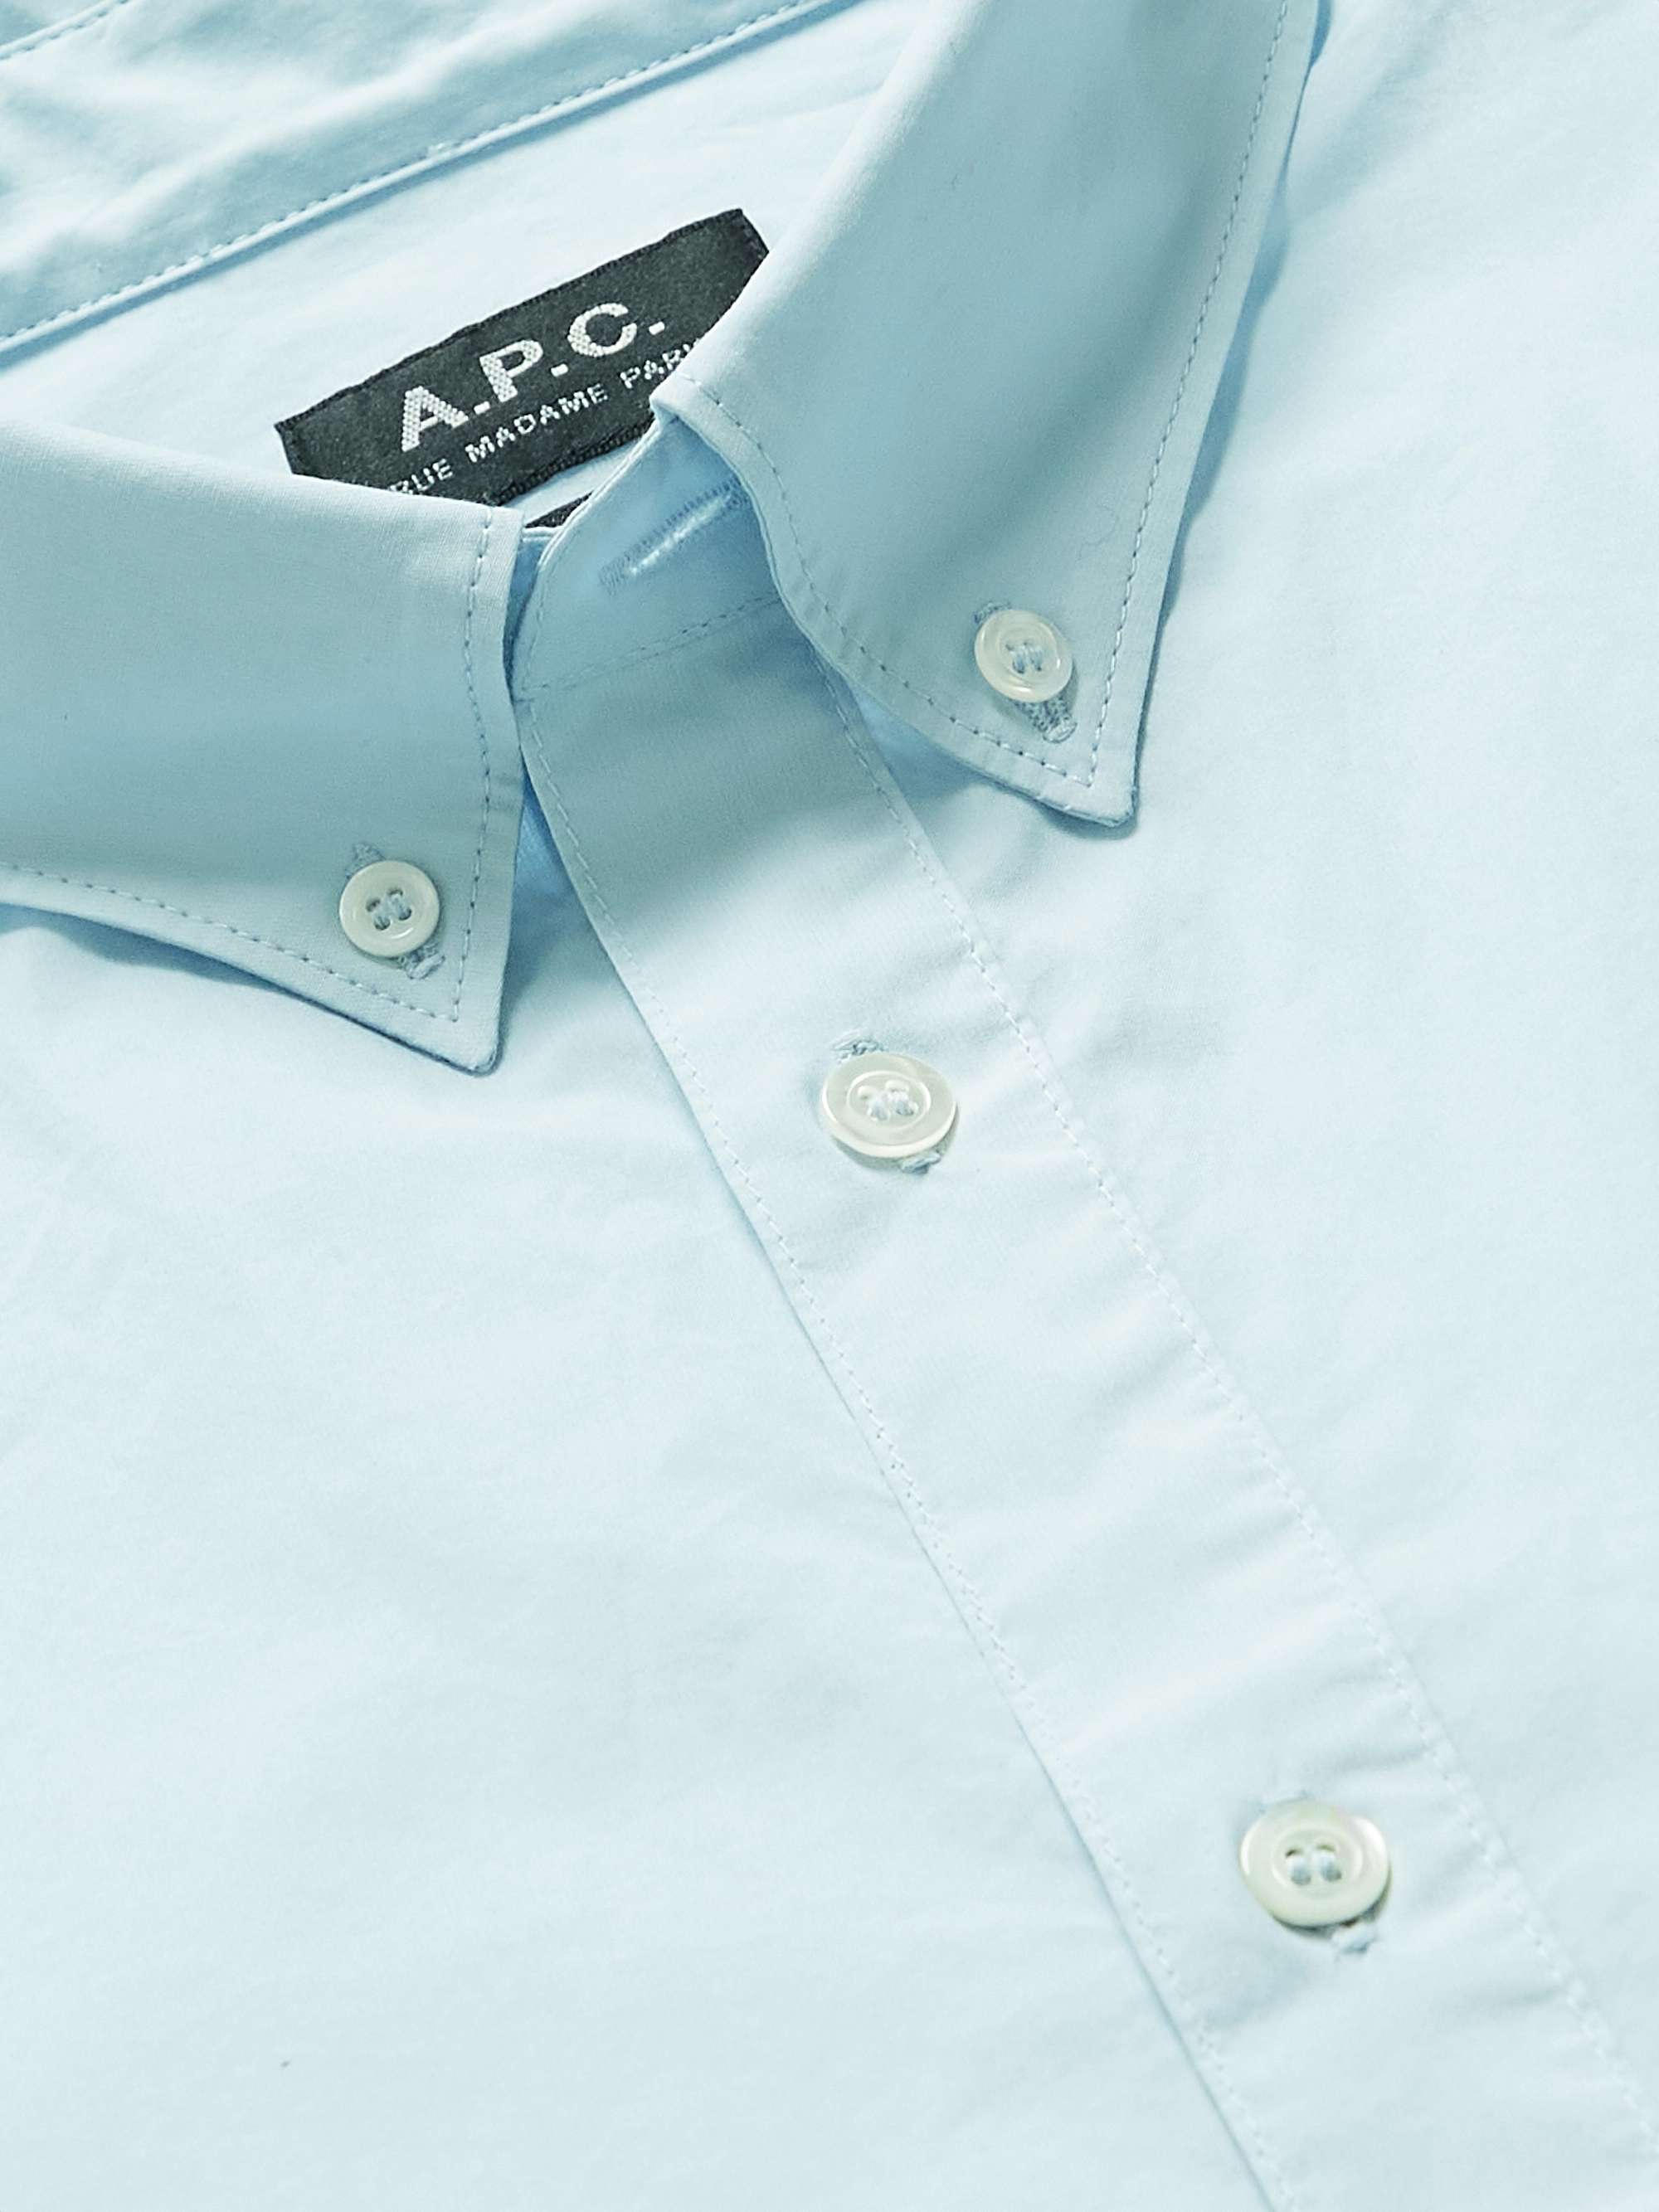 A.P.C. Edouard Button-Down Collar Cotton Shirt